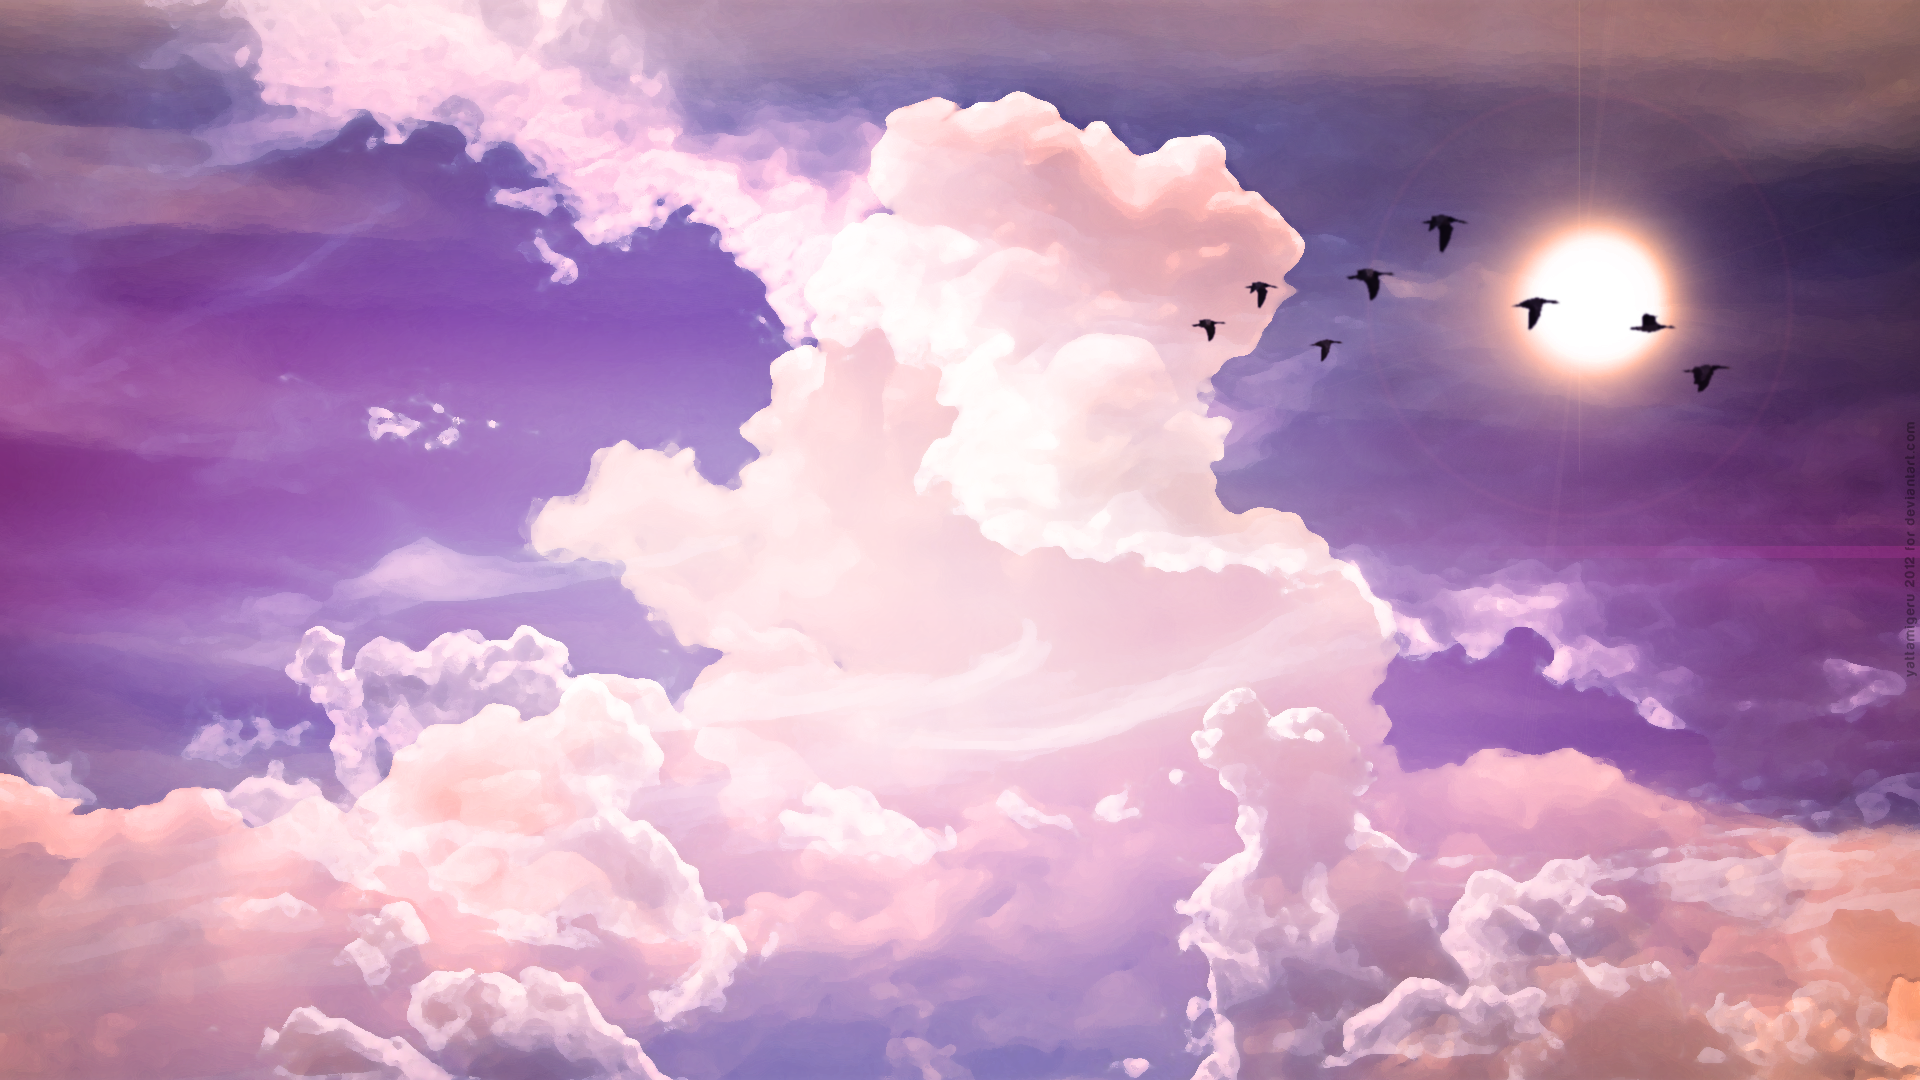 freetoedit clouds tumblr sky tumblr aesthetic backgroun